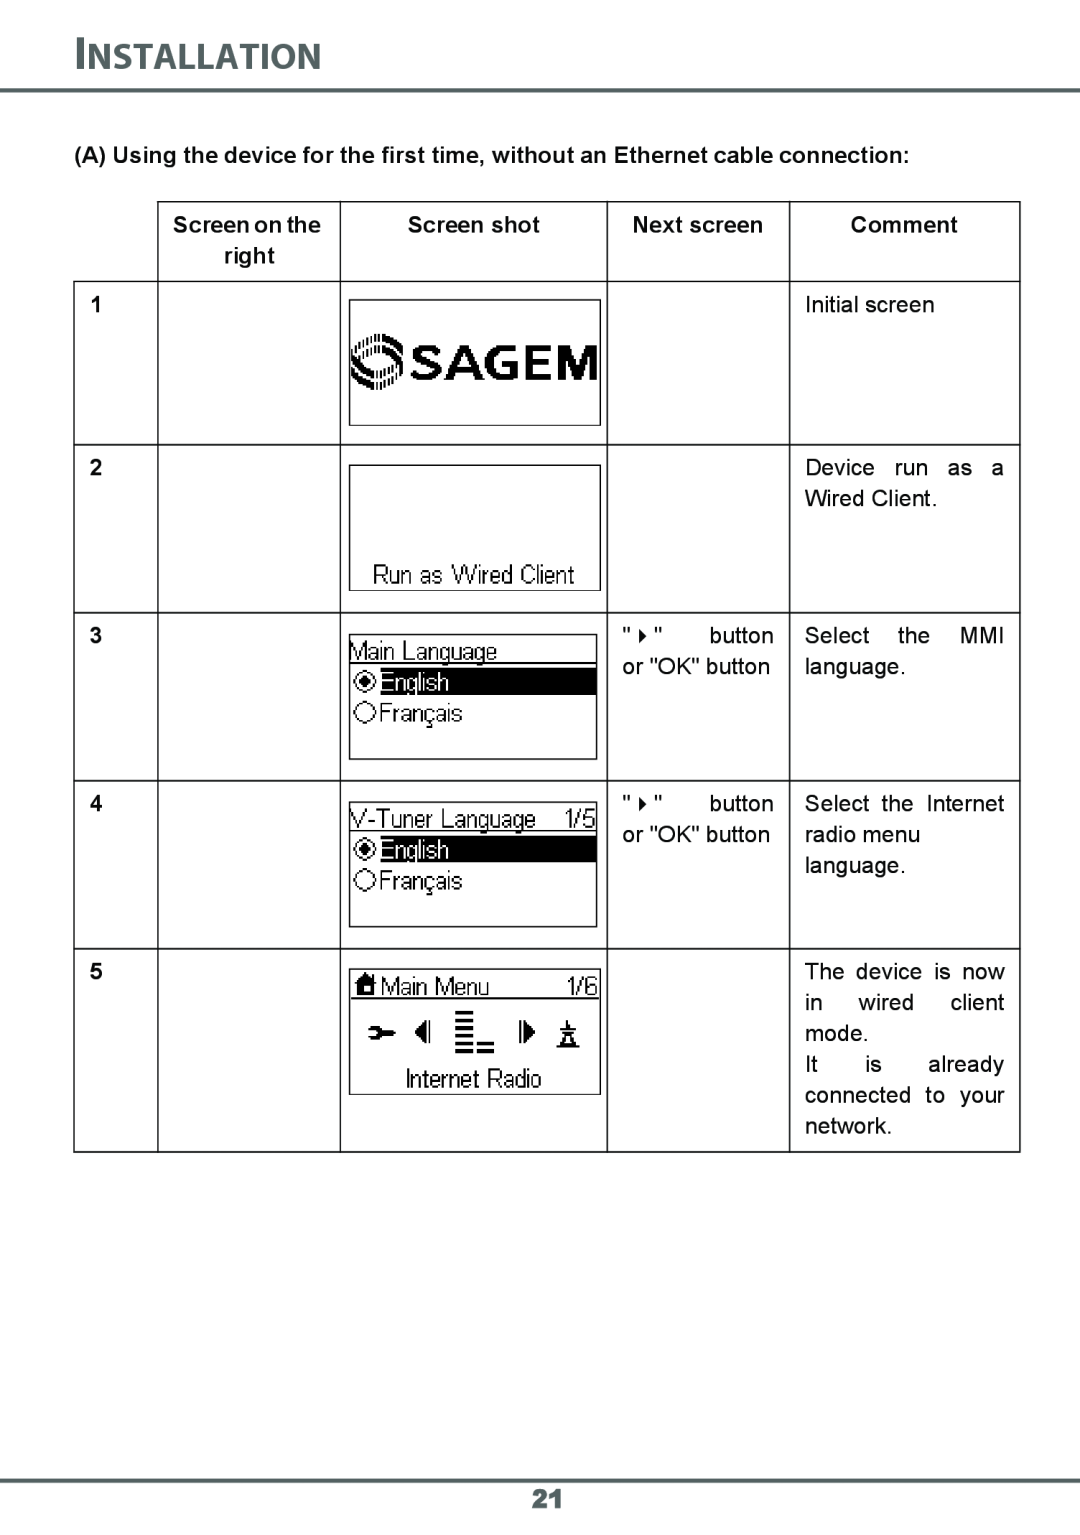 Sagem 700 manual Installation, Initial screen 